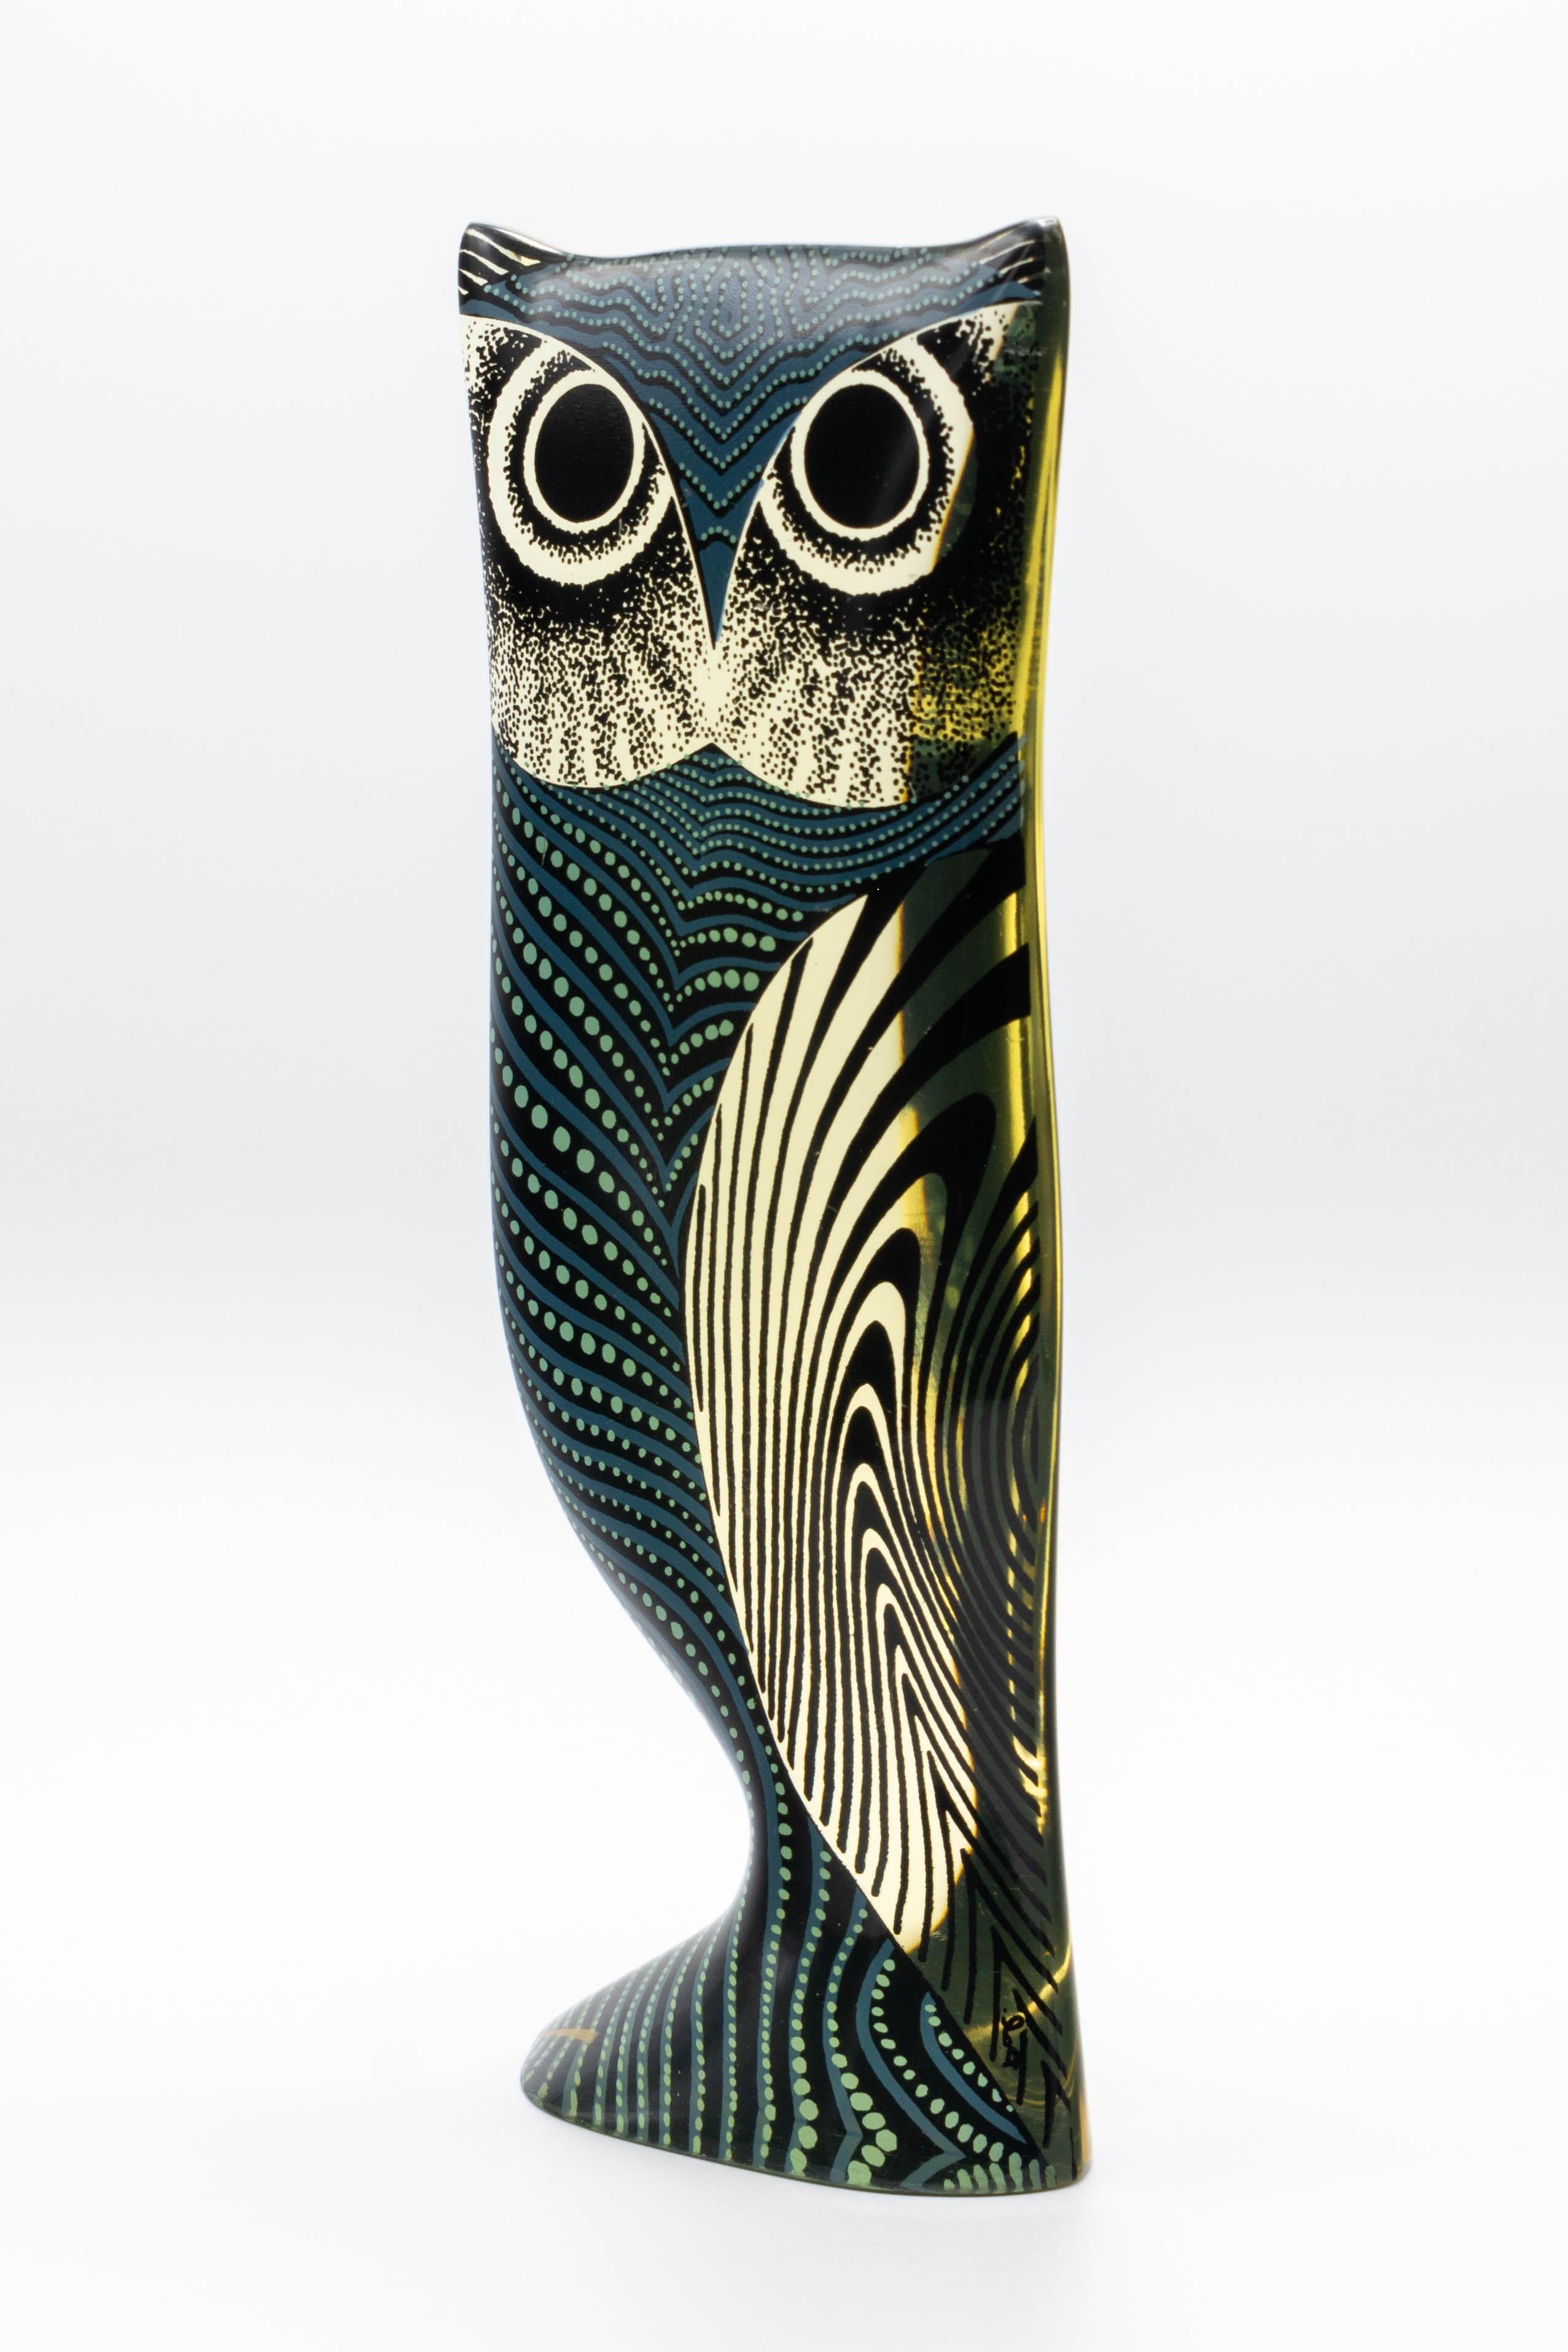 Mid-Century Modern Palatnik Op Art Lucite Owl